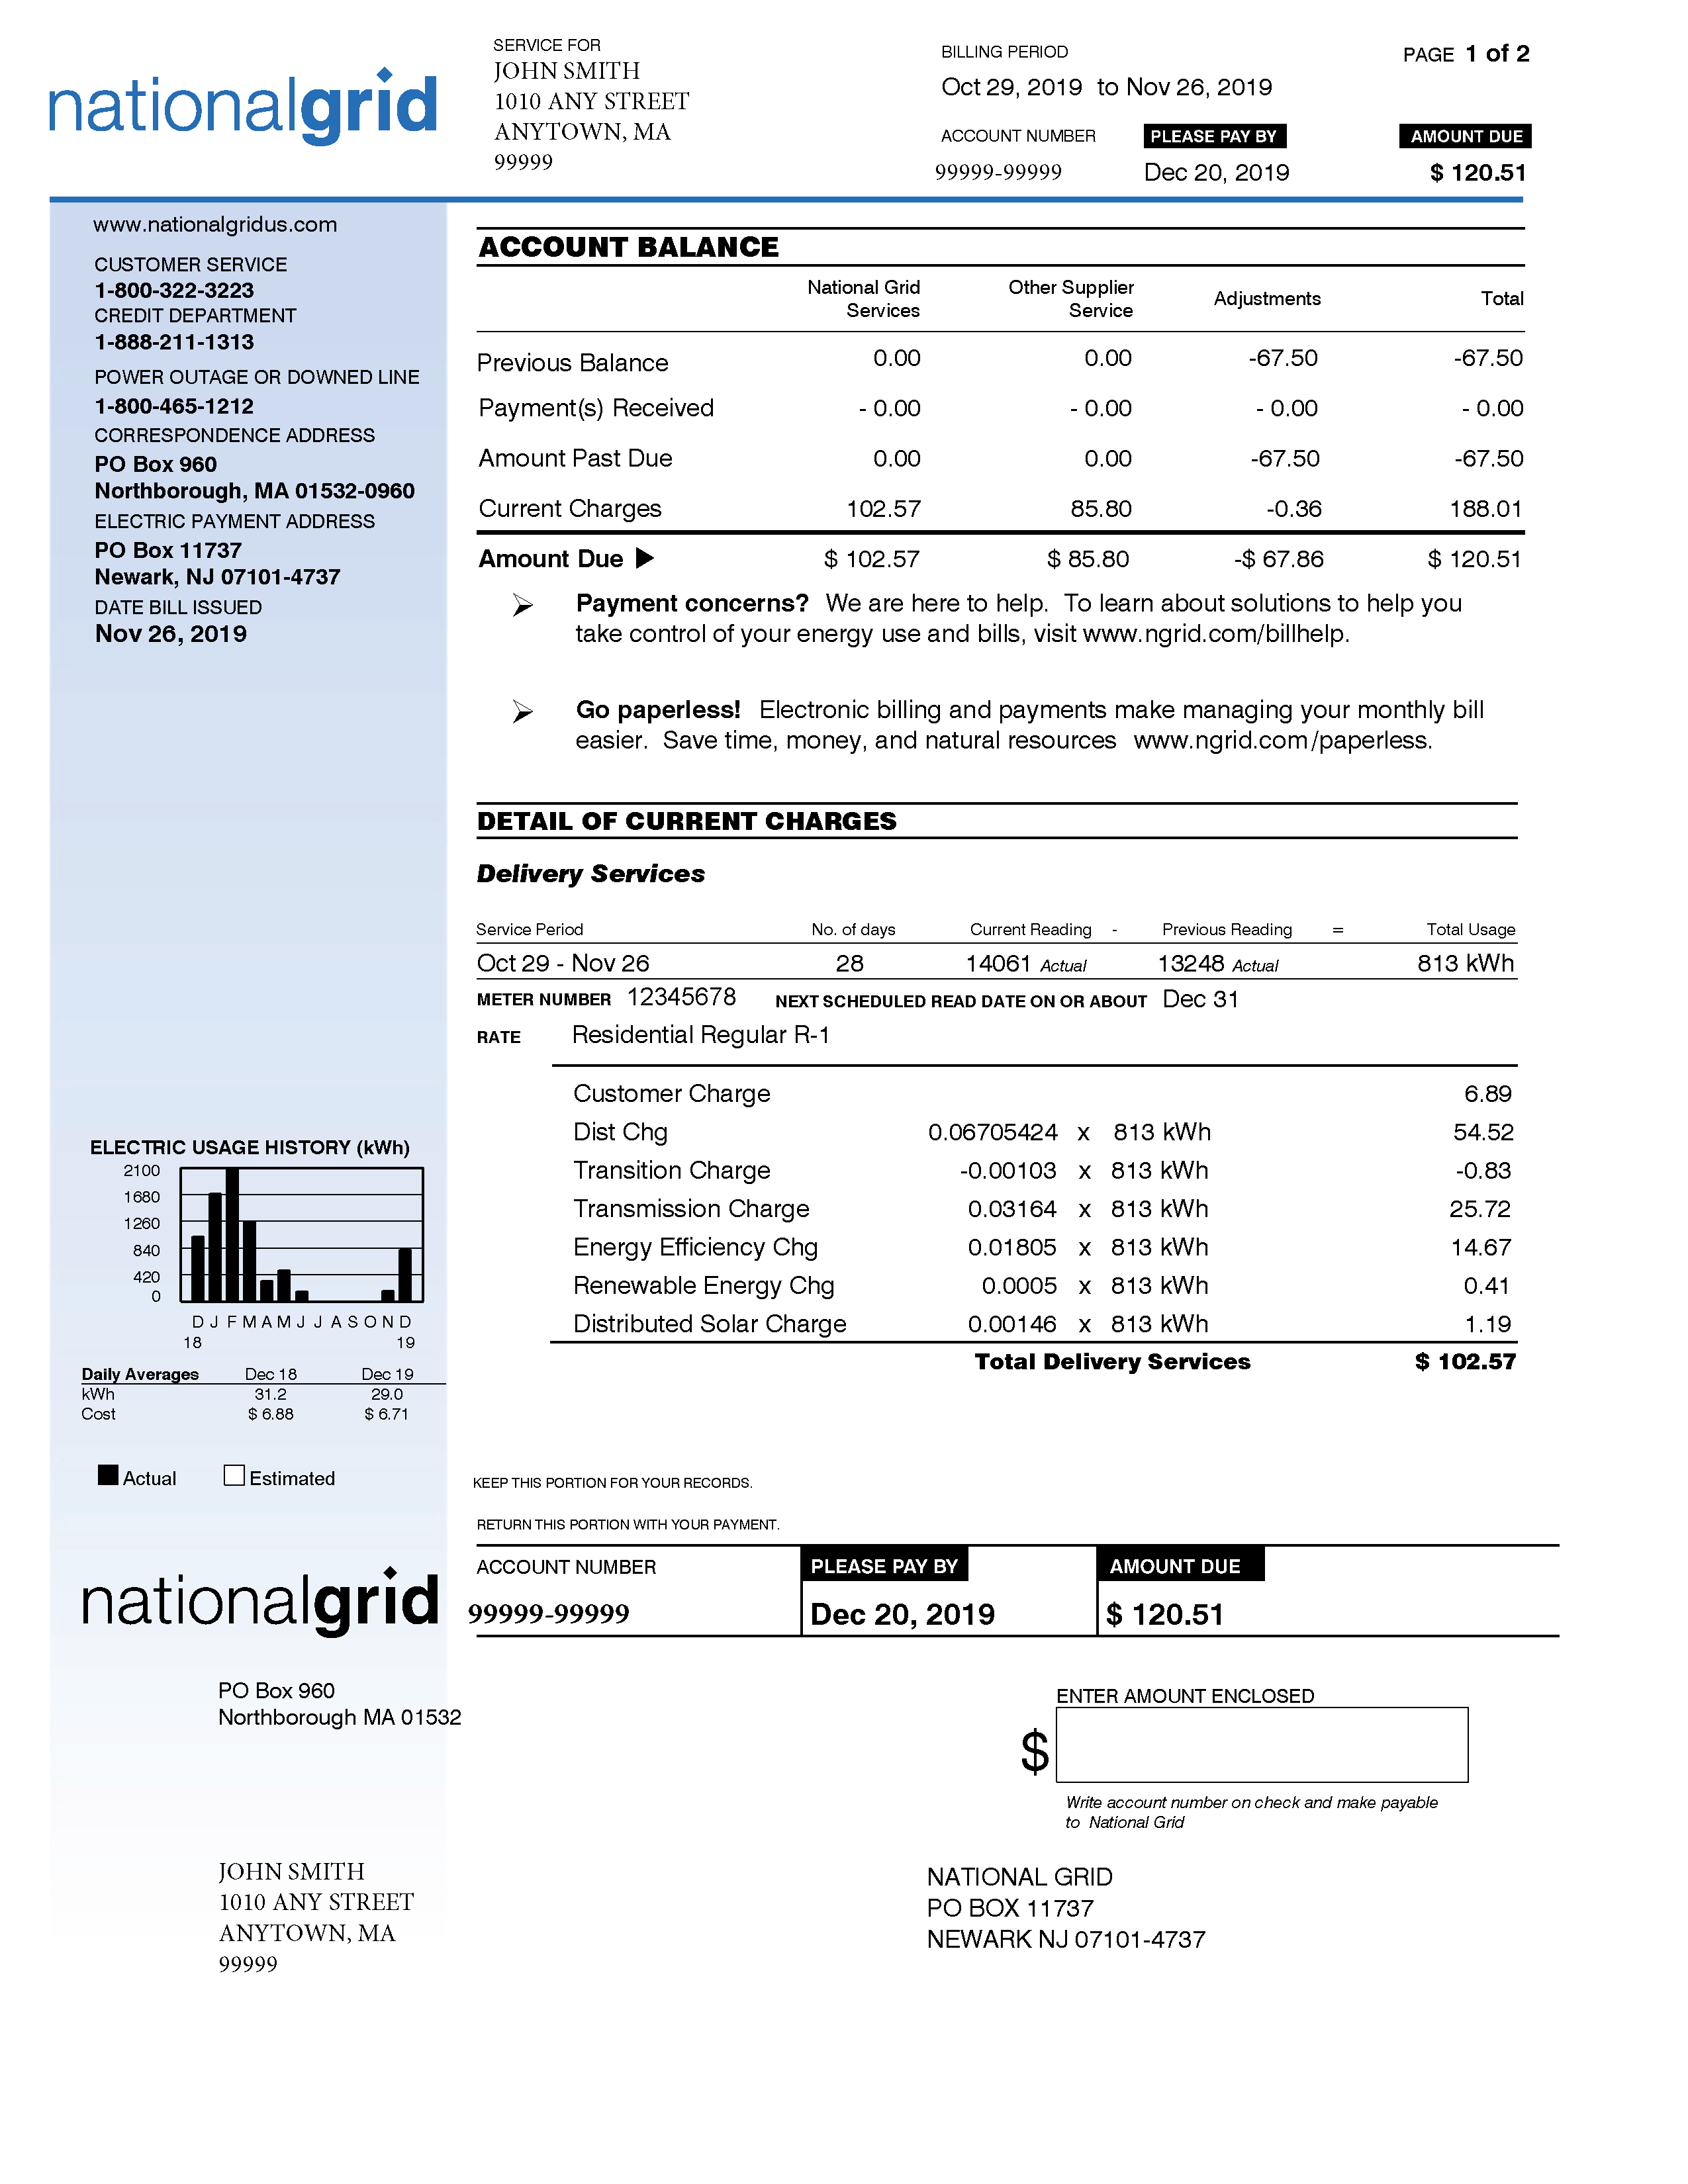 National Grid Sample Bill : Budget Bill - Electric | National Grid ...